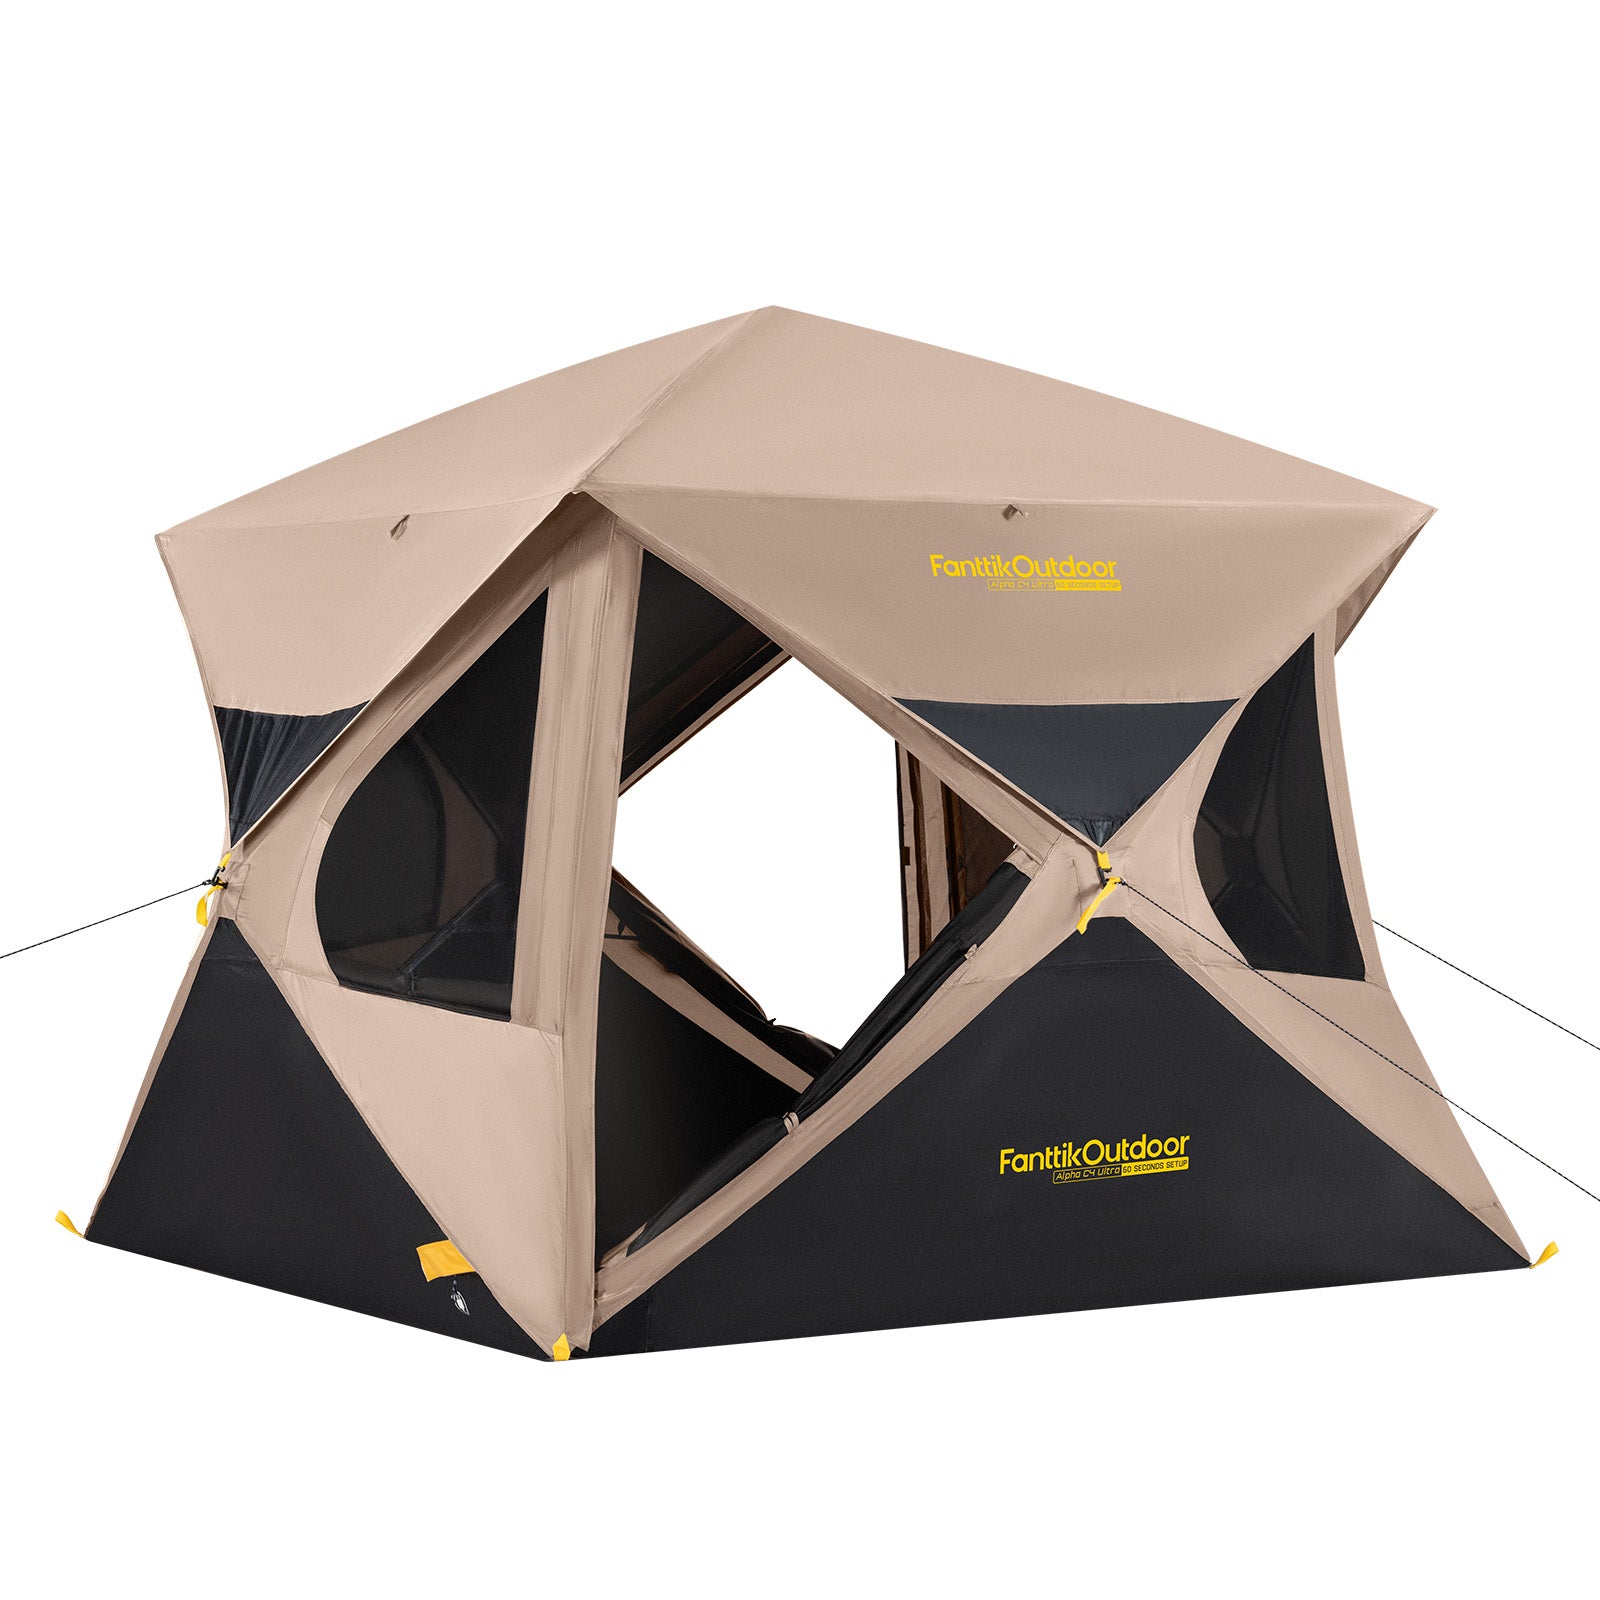 FanttikOutdoor Alpha C4 Ultra Instant Cabin Tent in beige and black, featuring multiple windows and mesh doors for ventilation.